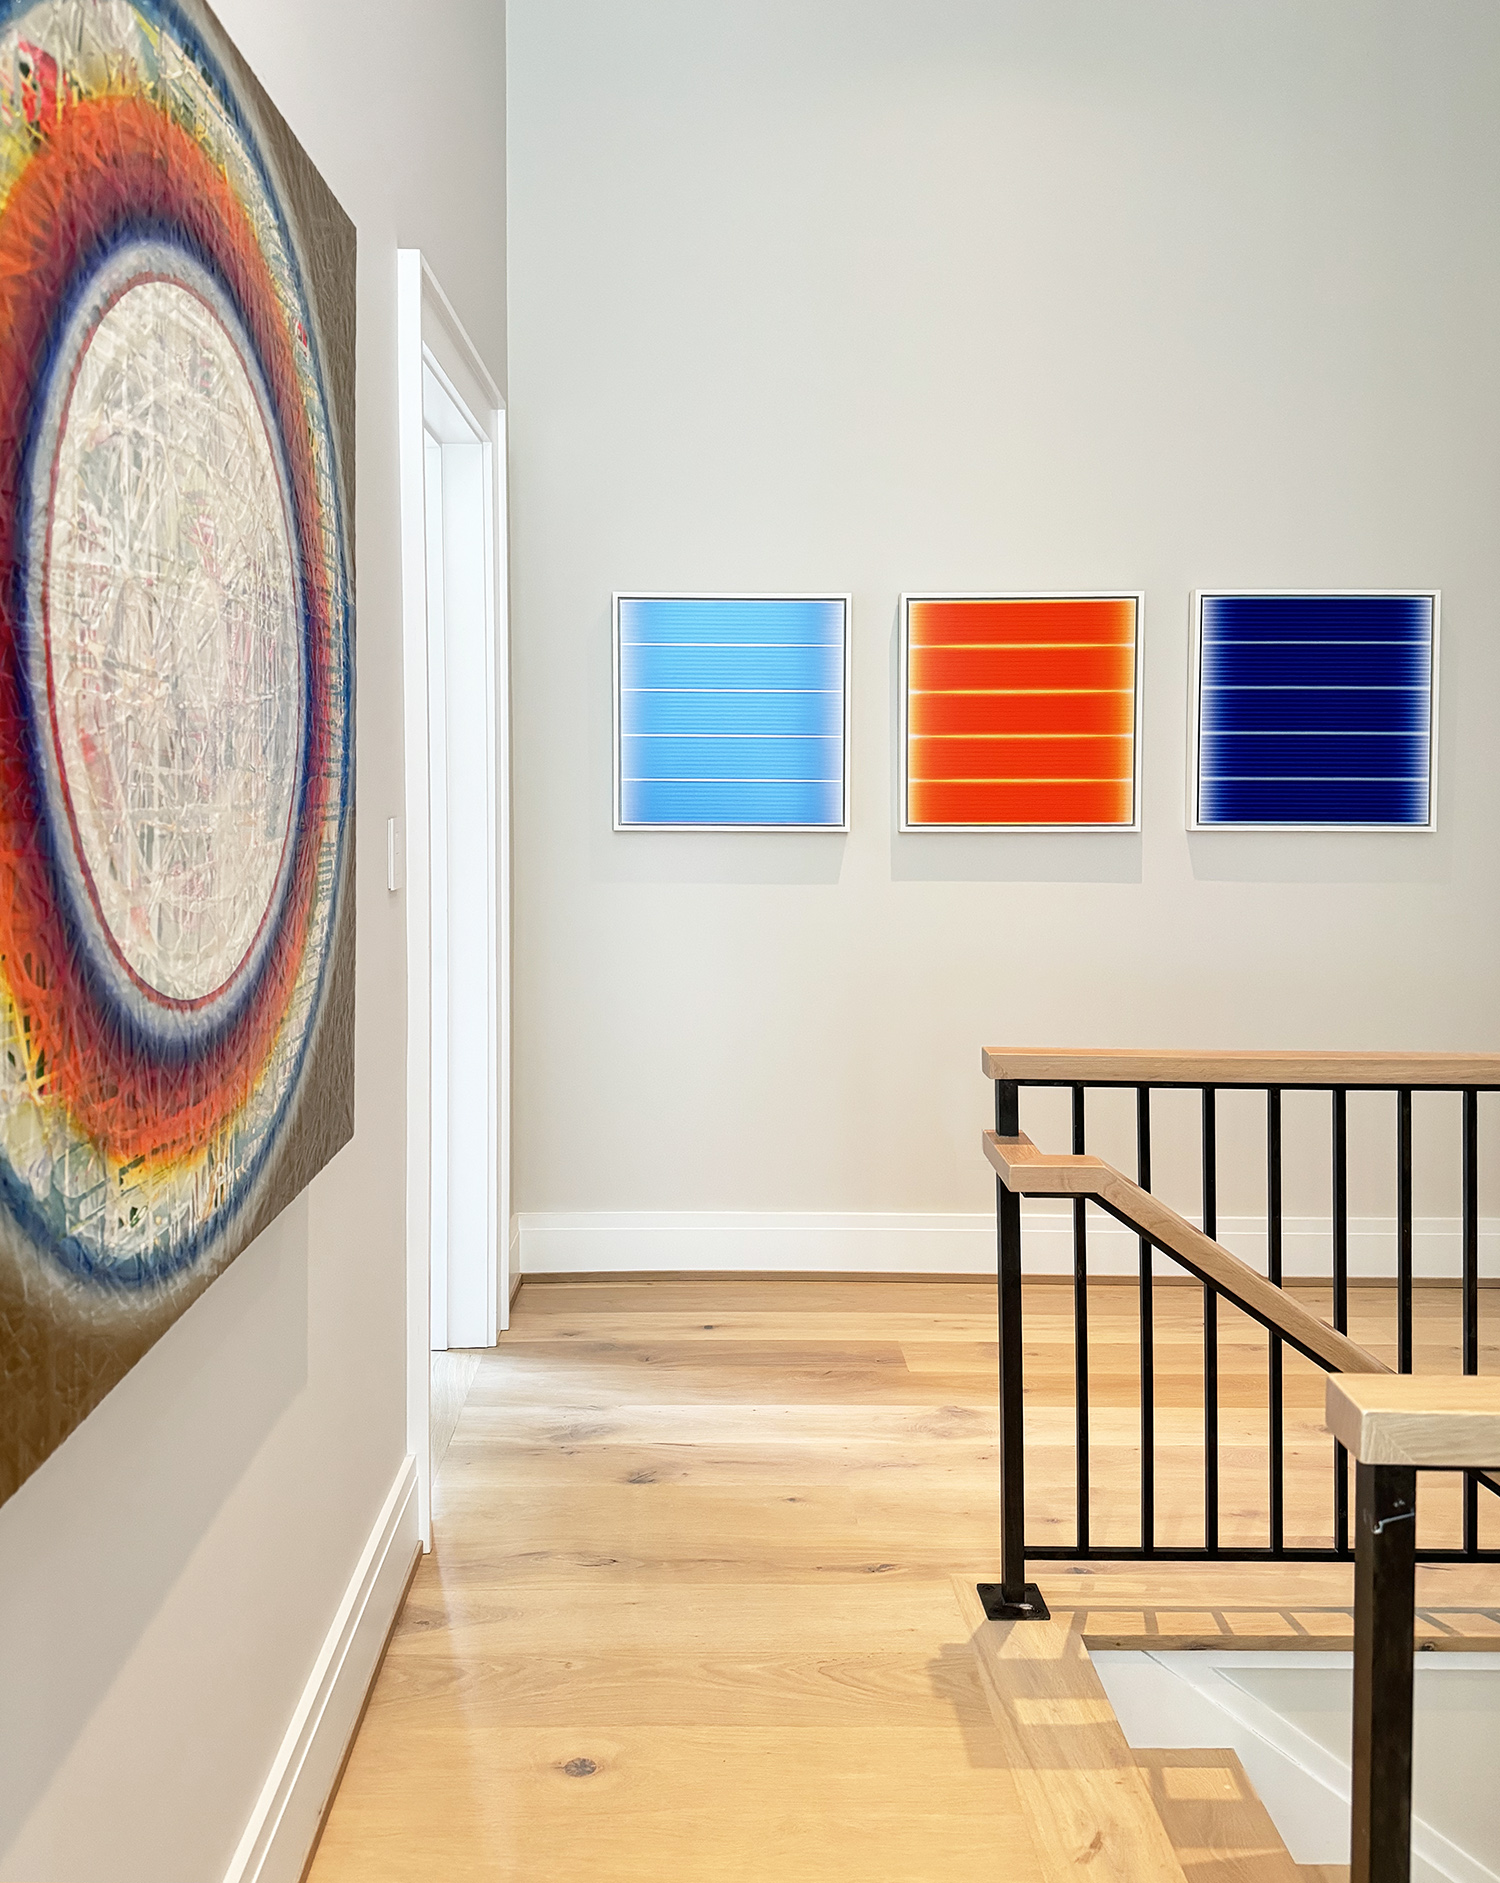 Tom Bolles, left to right: Vibrant Bright Blue, Vibrant Orange, Vibrant Deep Blue, 23.5 X 23.5; 25.5 X 25.5 each 